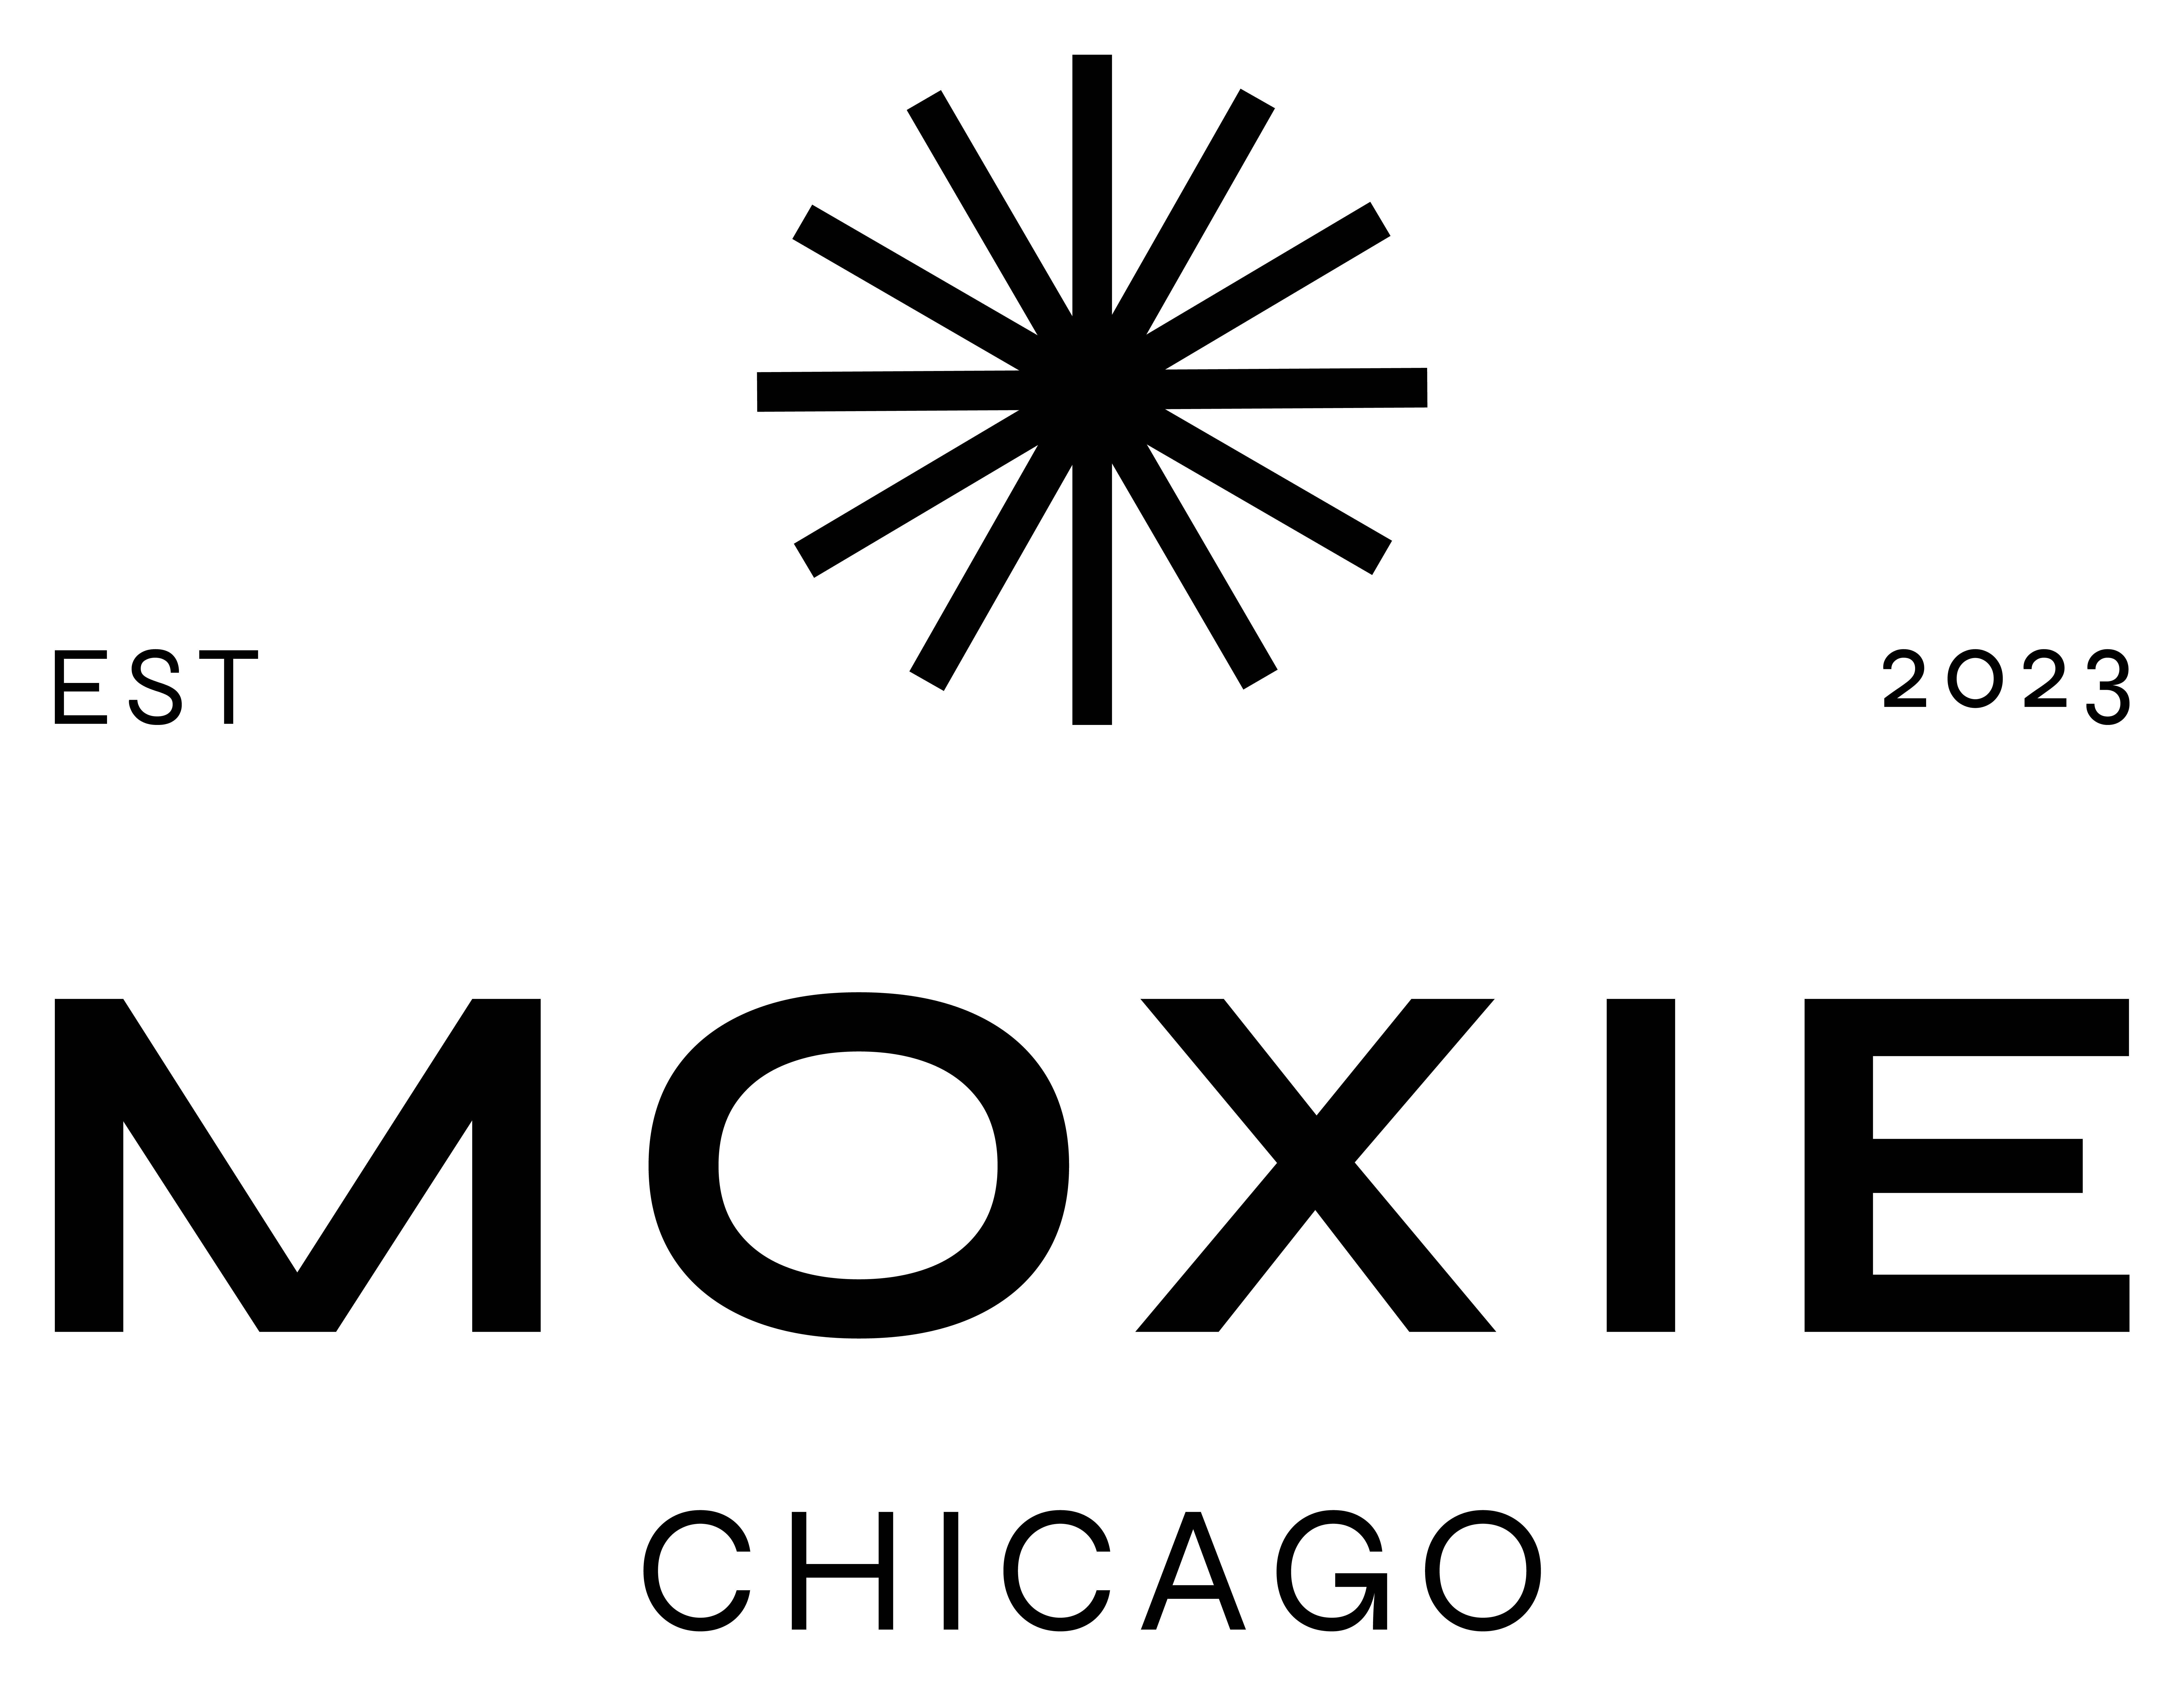 MOXIE Logo- block font with an asterisk logo symbol